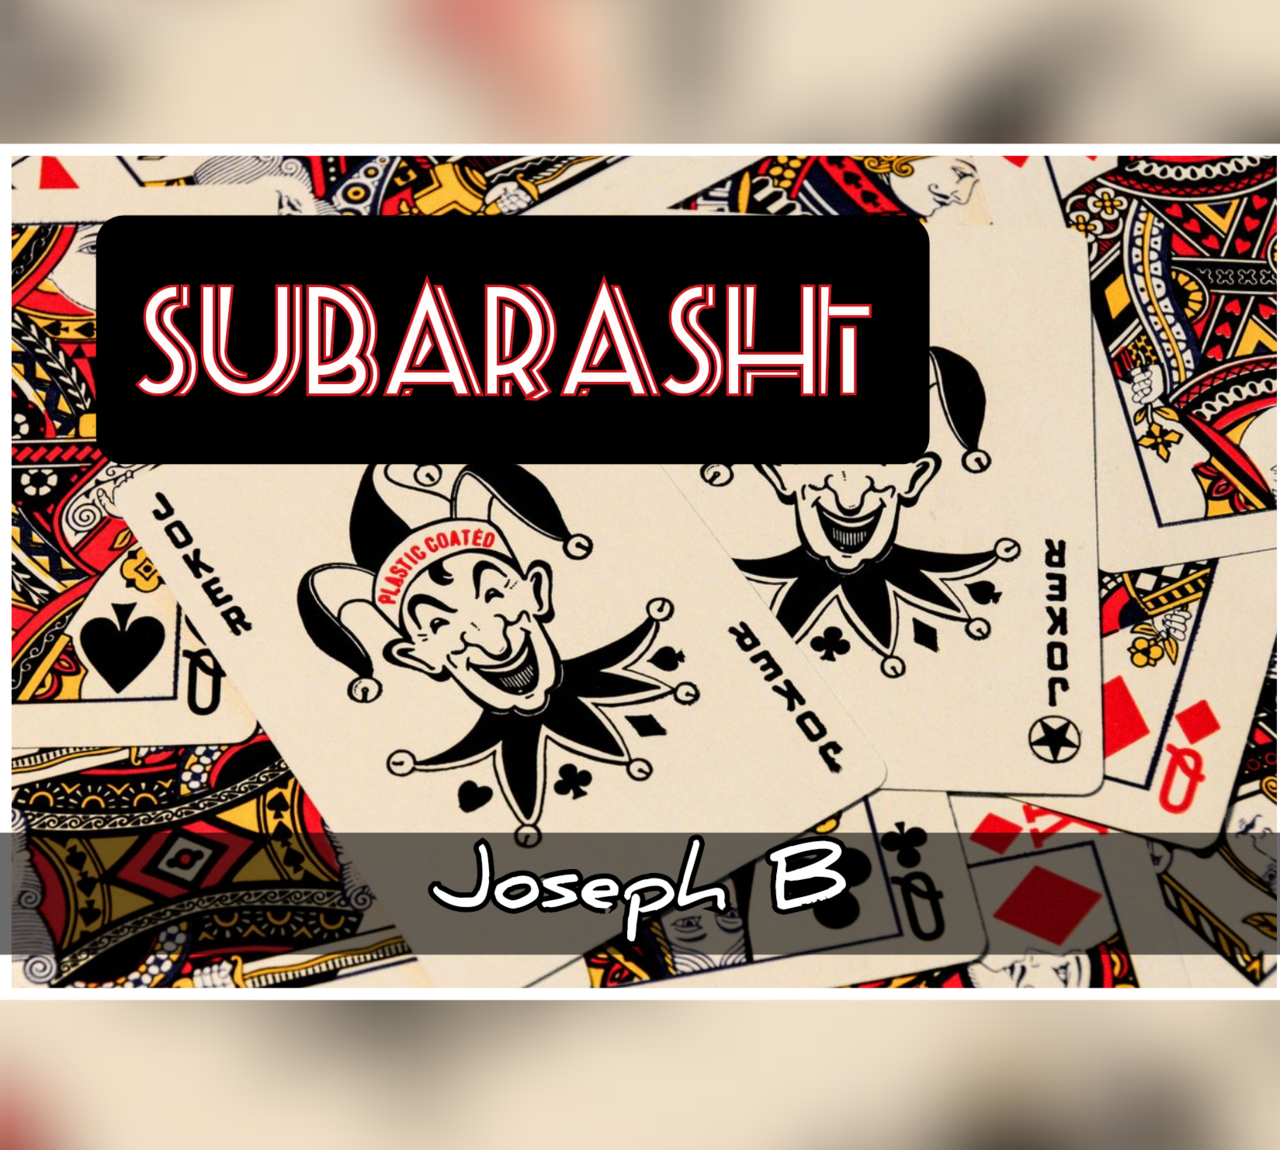 Joseph B. - SUBARASH?